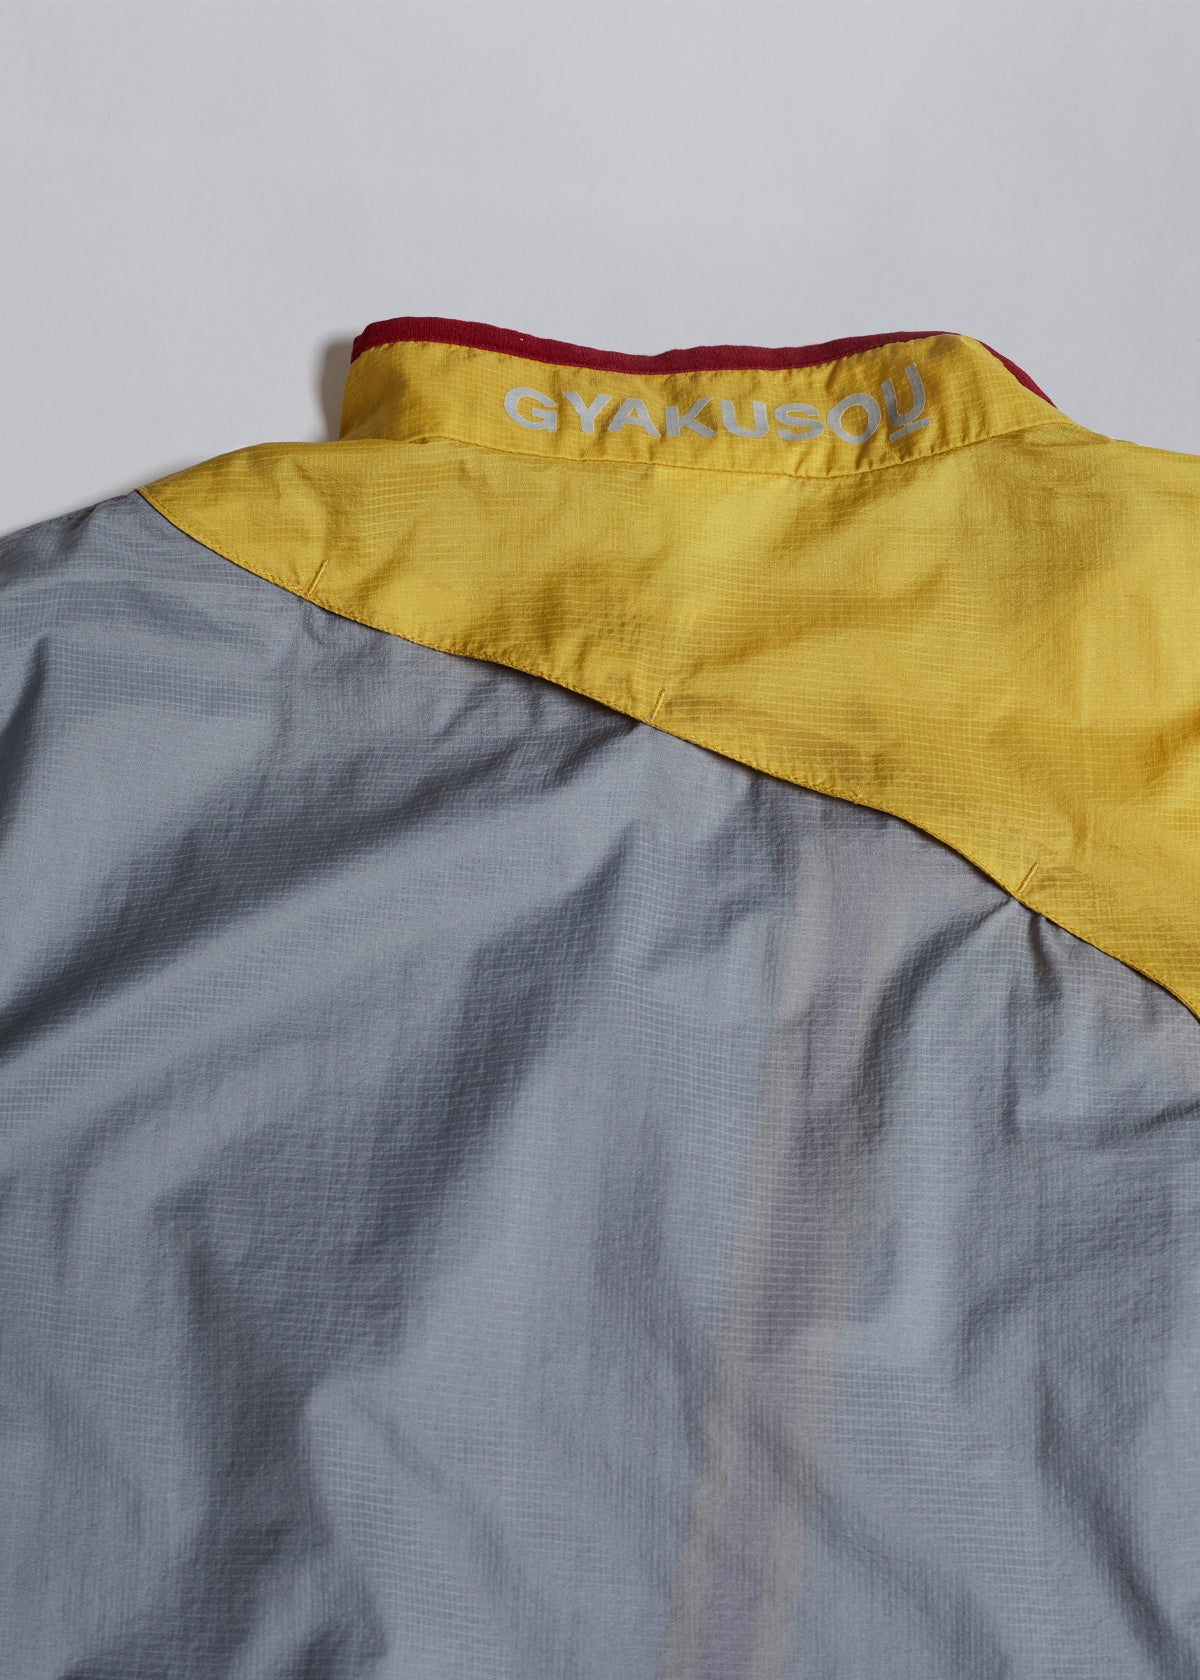 Nike/Undercover Gyakusou Curve Split Jacket SS2014 - Large – The